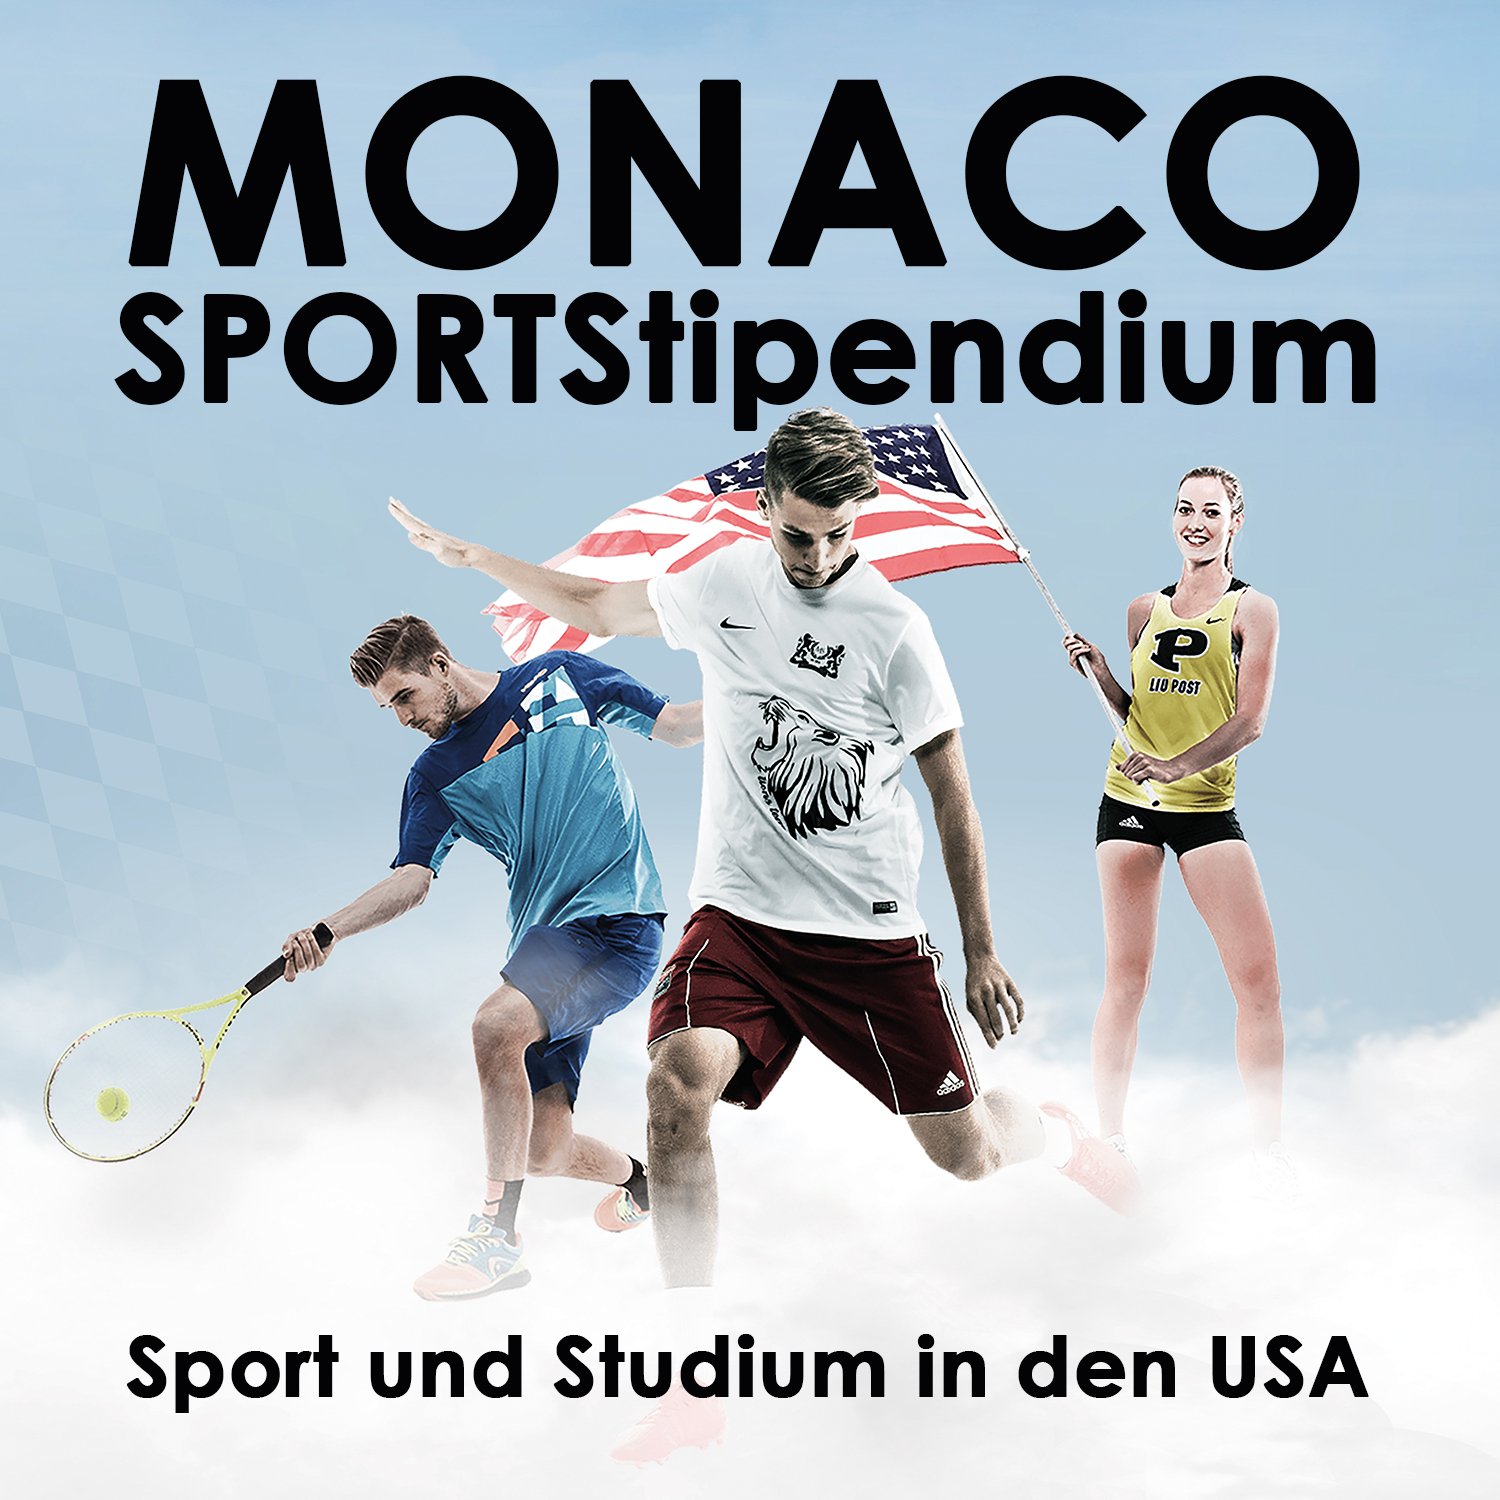 (c) Monaco-sportstipendium.de